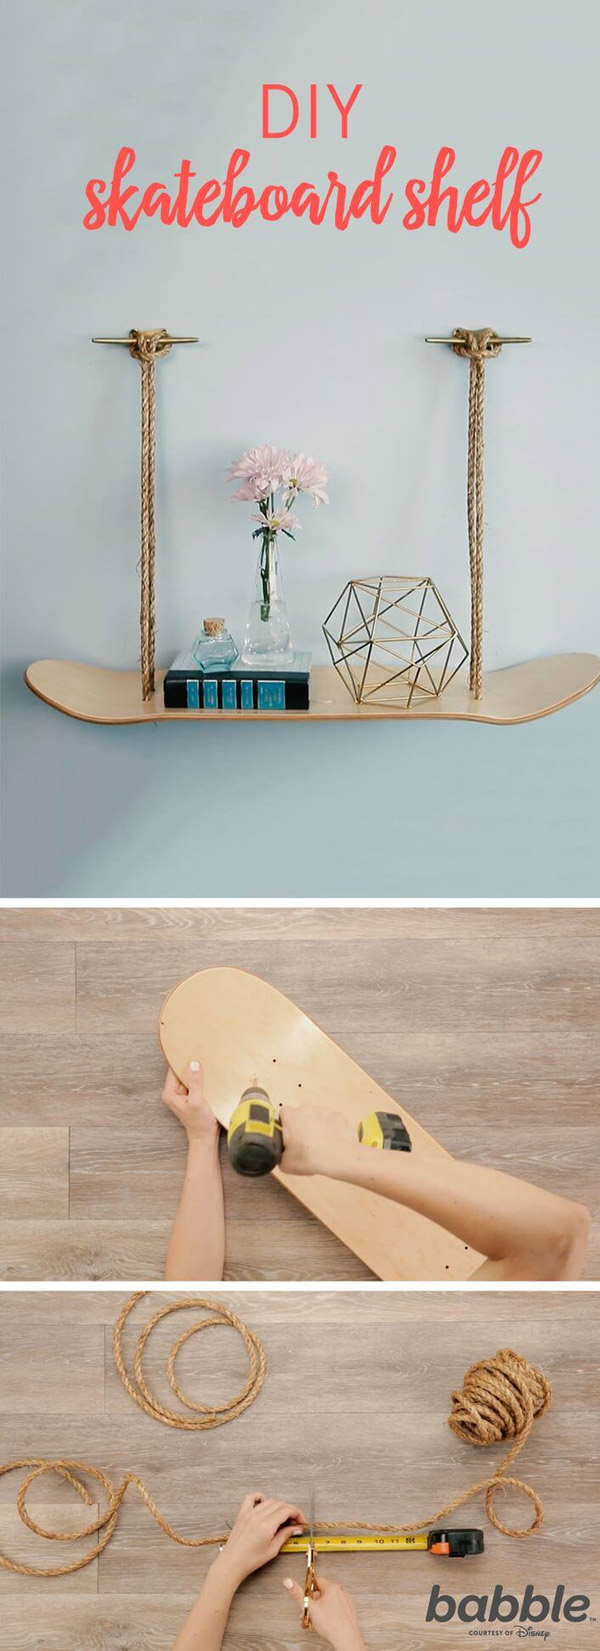 Skateboard bookshelf design.jpg